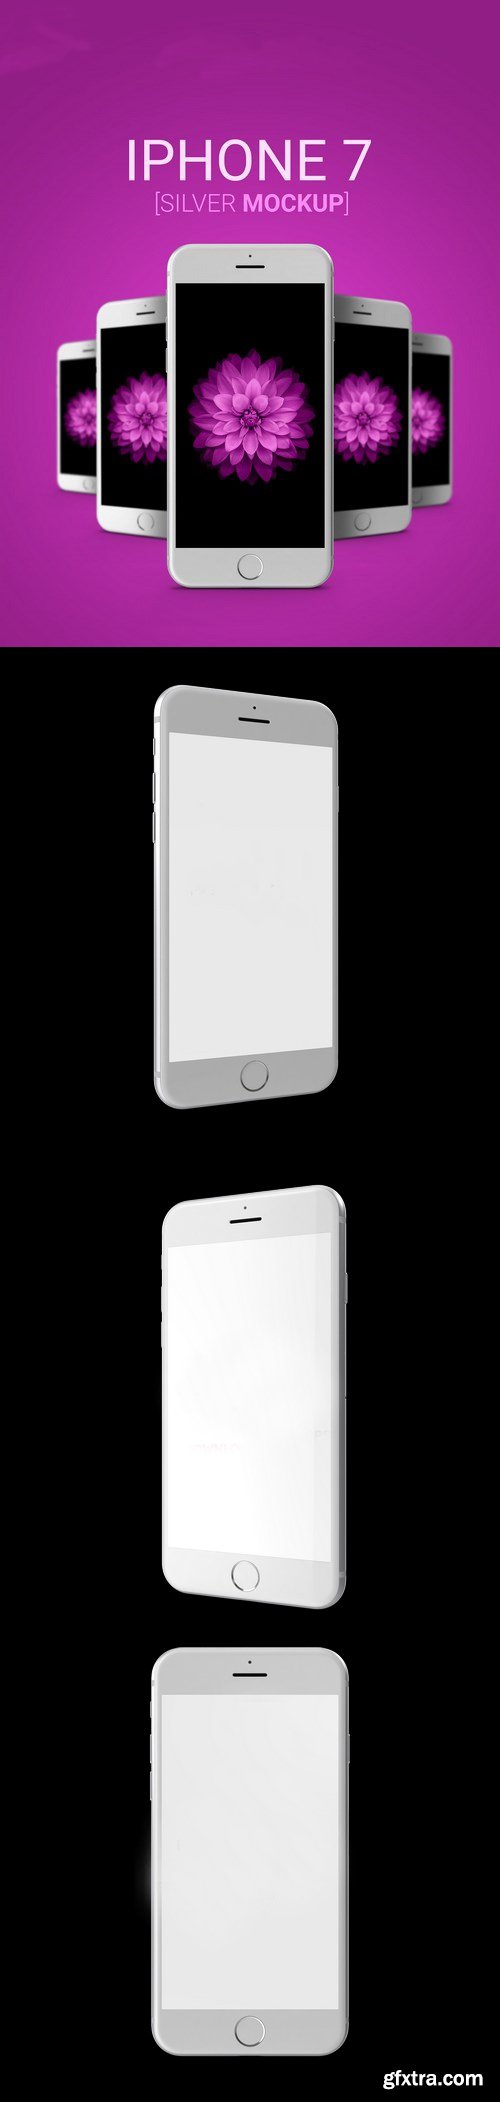 iPhone 7 Silver Mockup